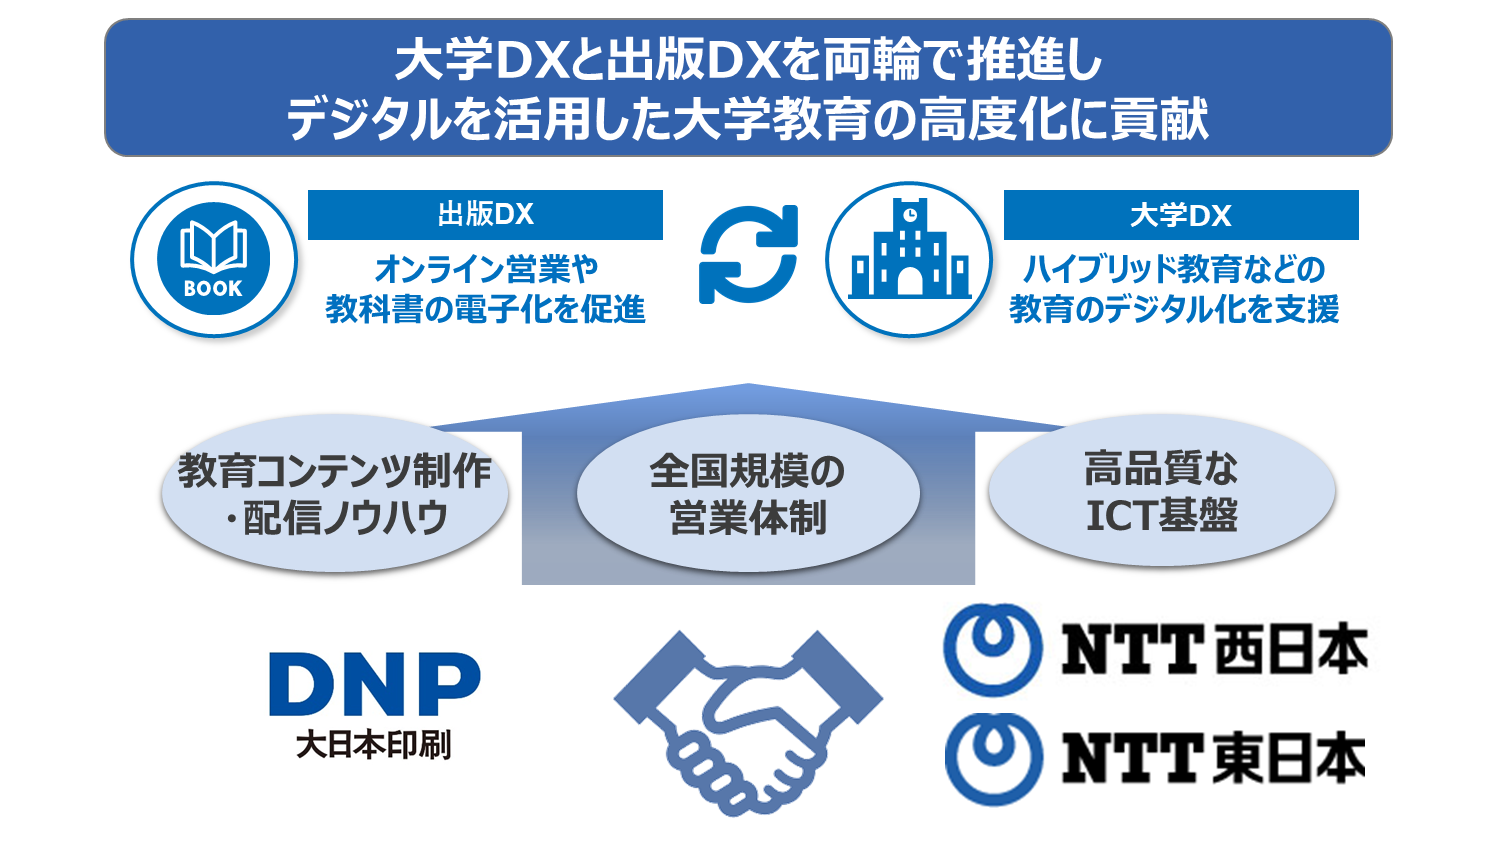 NTT西日本、NTT東日本、大日本印刷 電子教科書・教材配信サービスの全国展開に向けて協業体制を強化 ニュース